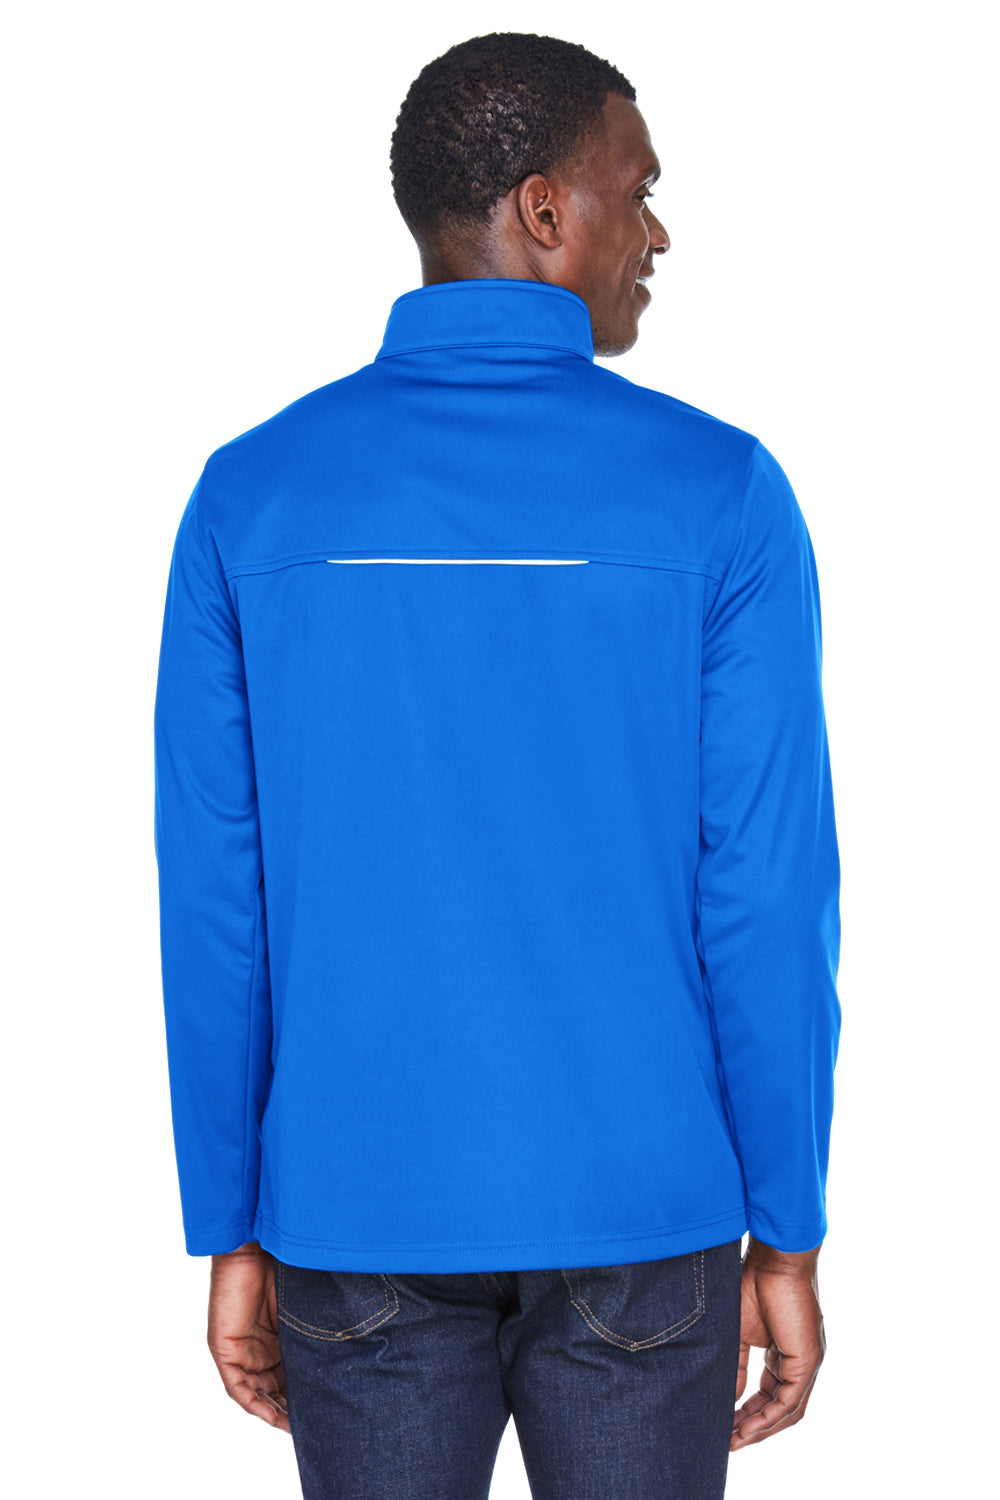 Core 365 CE708 Mens Techno Lite Water Resistant Full Zip Jacket Royal Blue Back